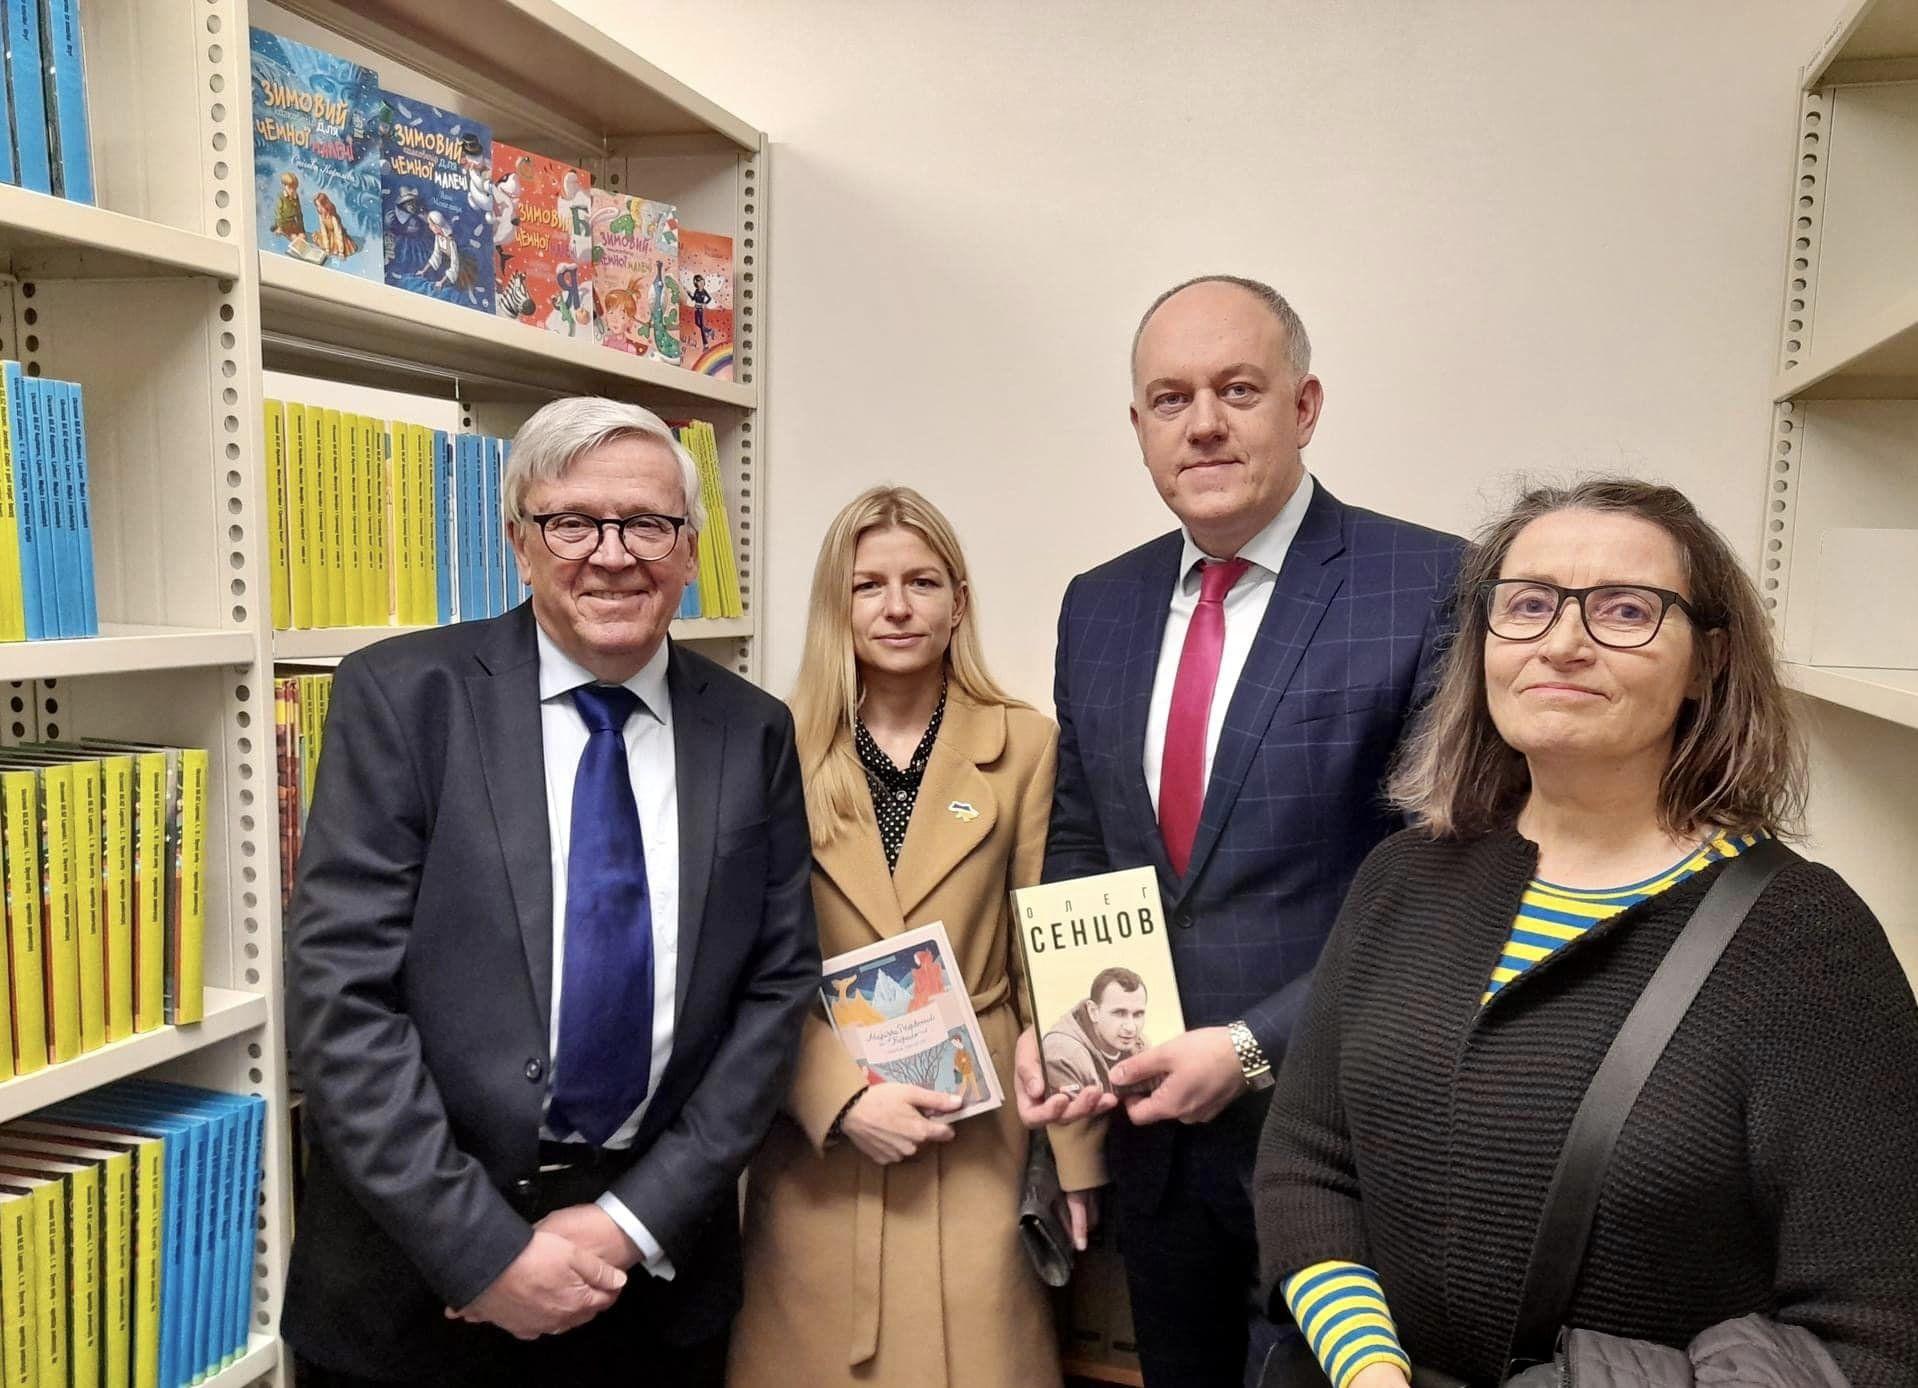 The Royal Library of Denmark received 2,000 Ukrainian books